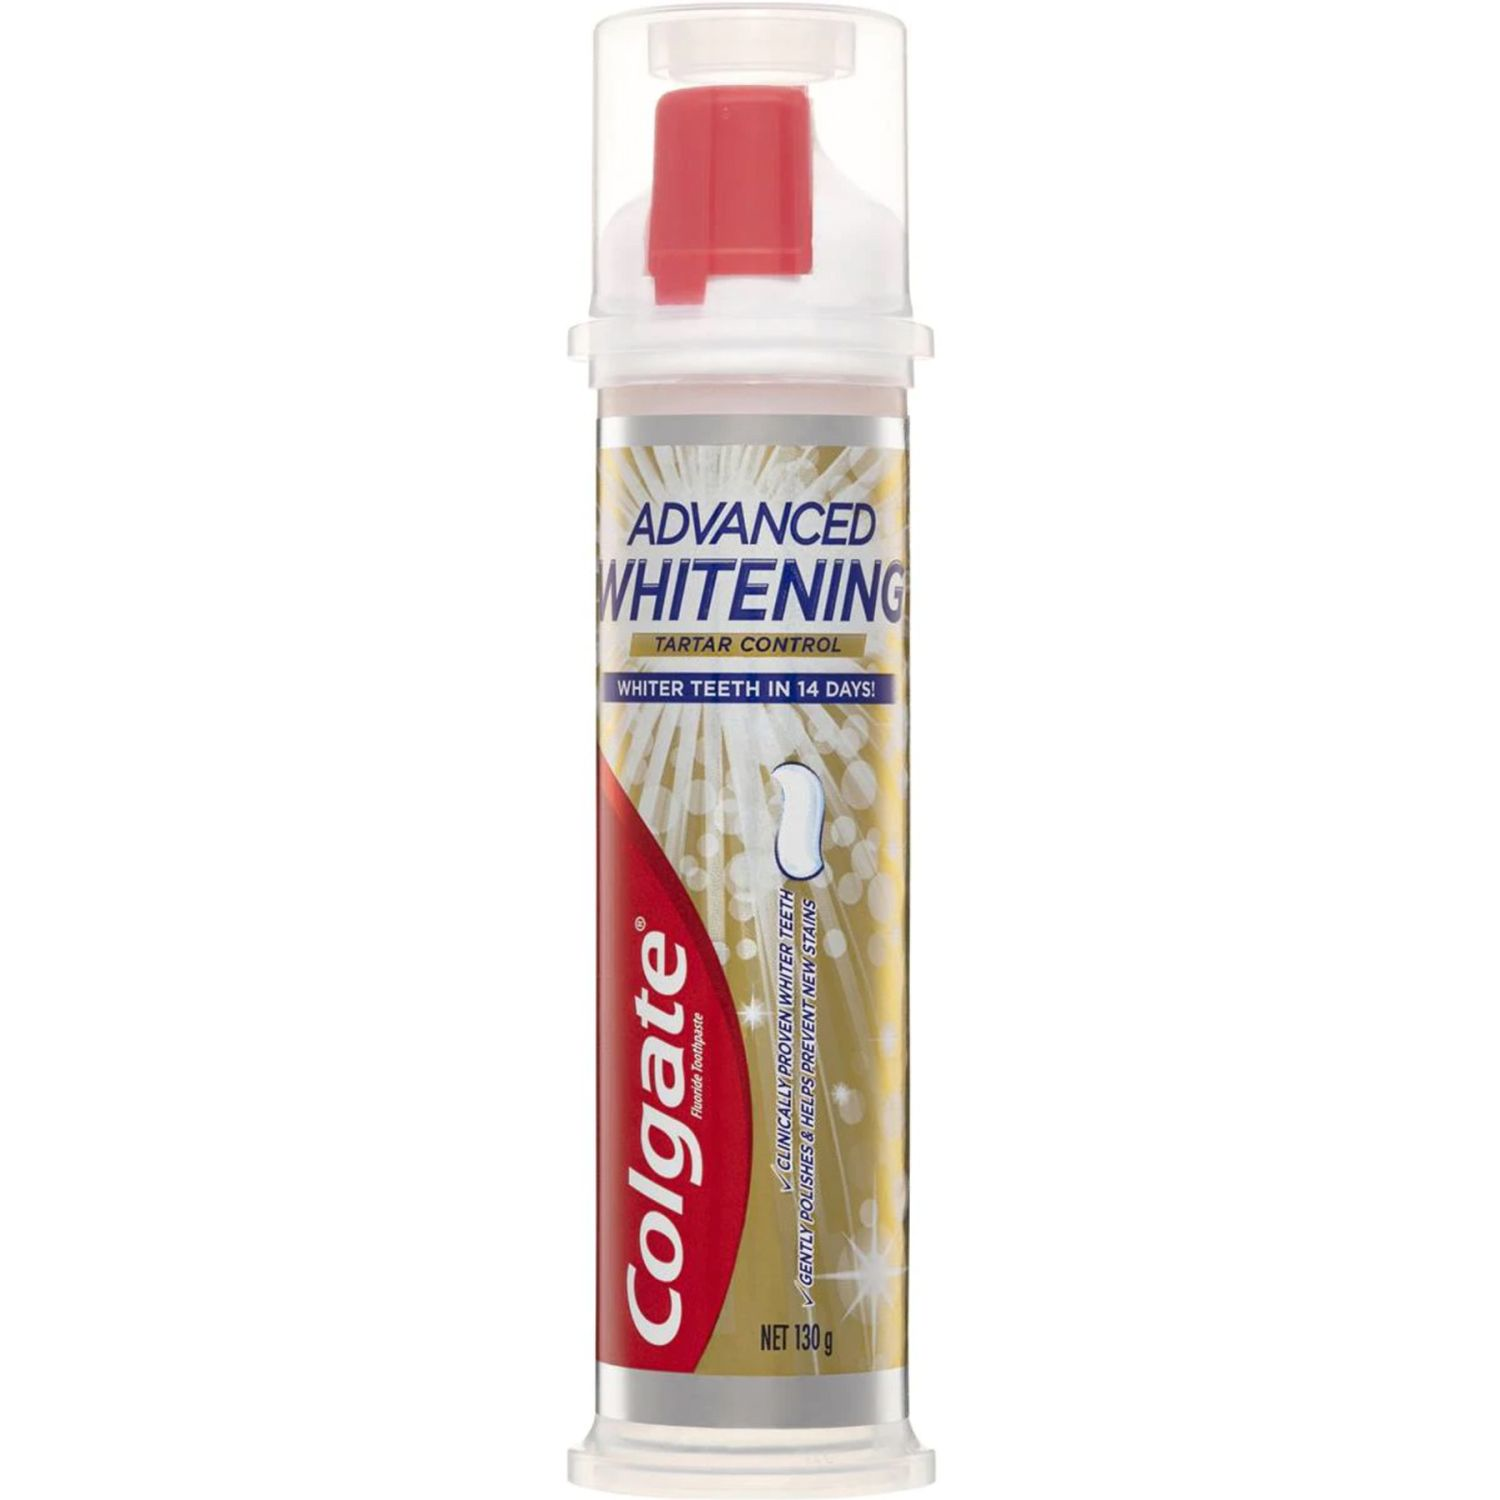 Colgate Advanced Whitening Tartar Control Whitening Toothpaste, 130 Gram